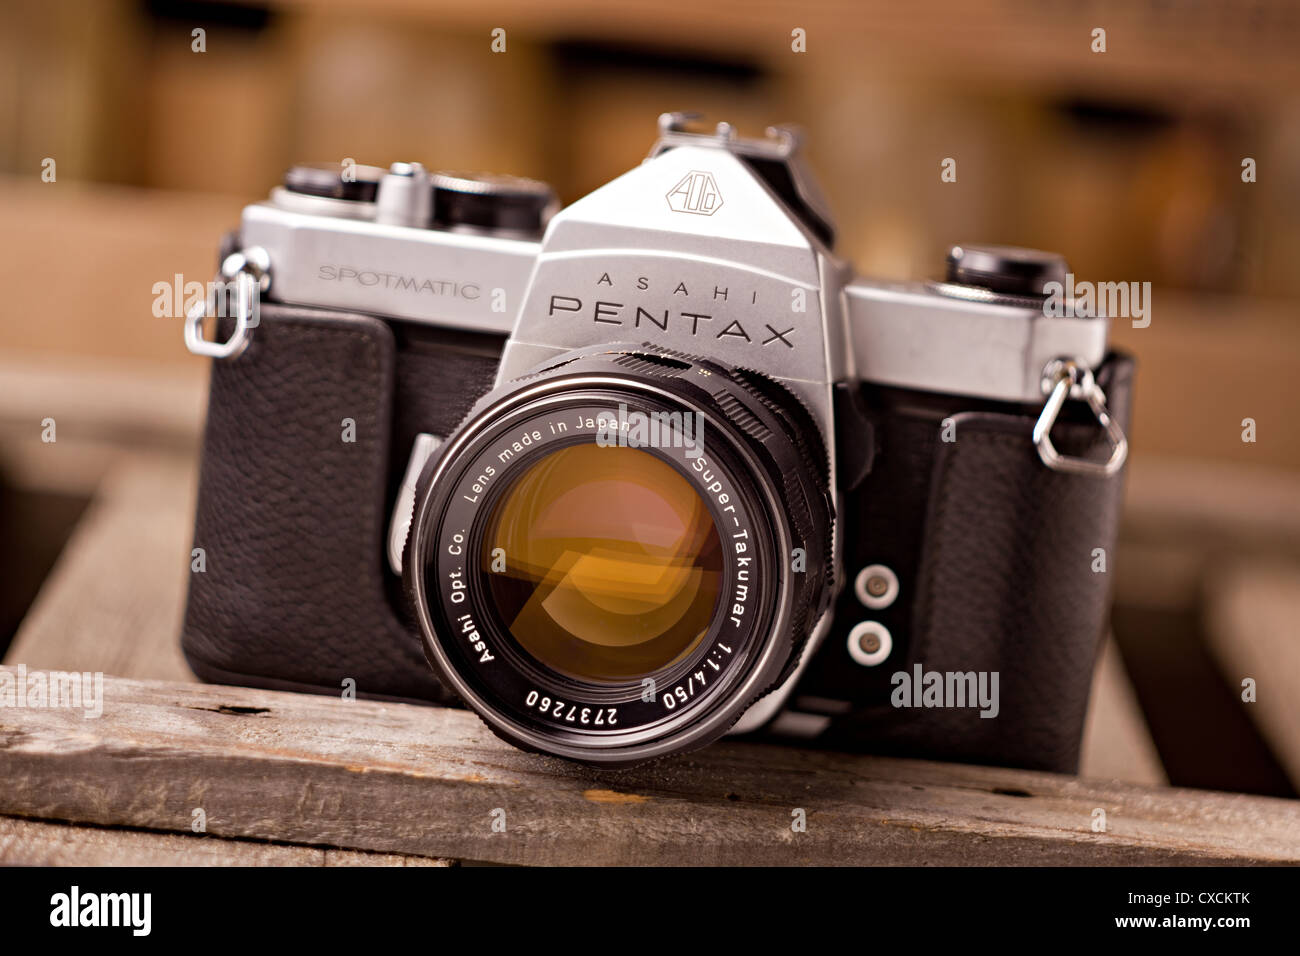 Pentax Honeywell / Asahi Pentax 35mm fotocamera a pellicola Foto Stock